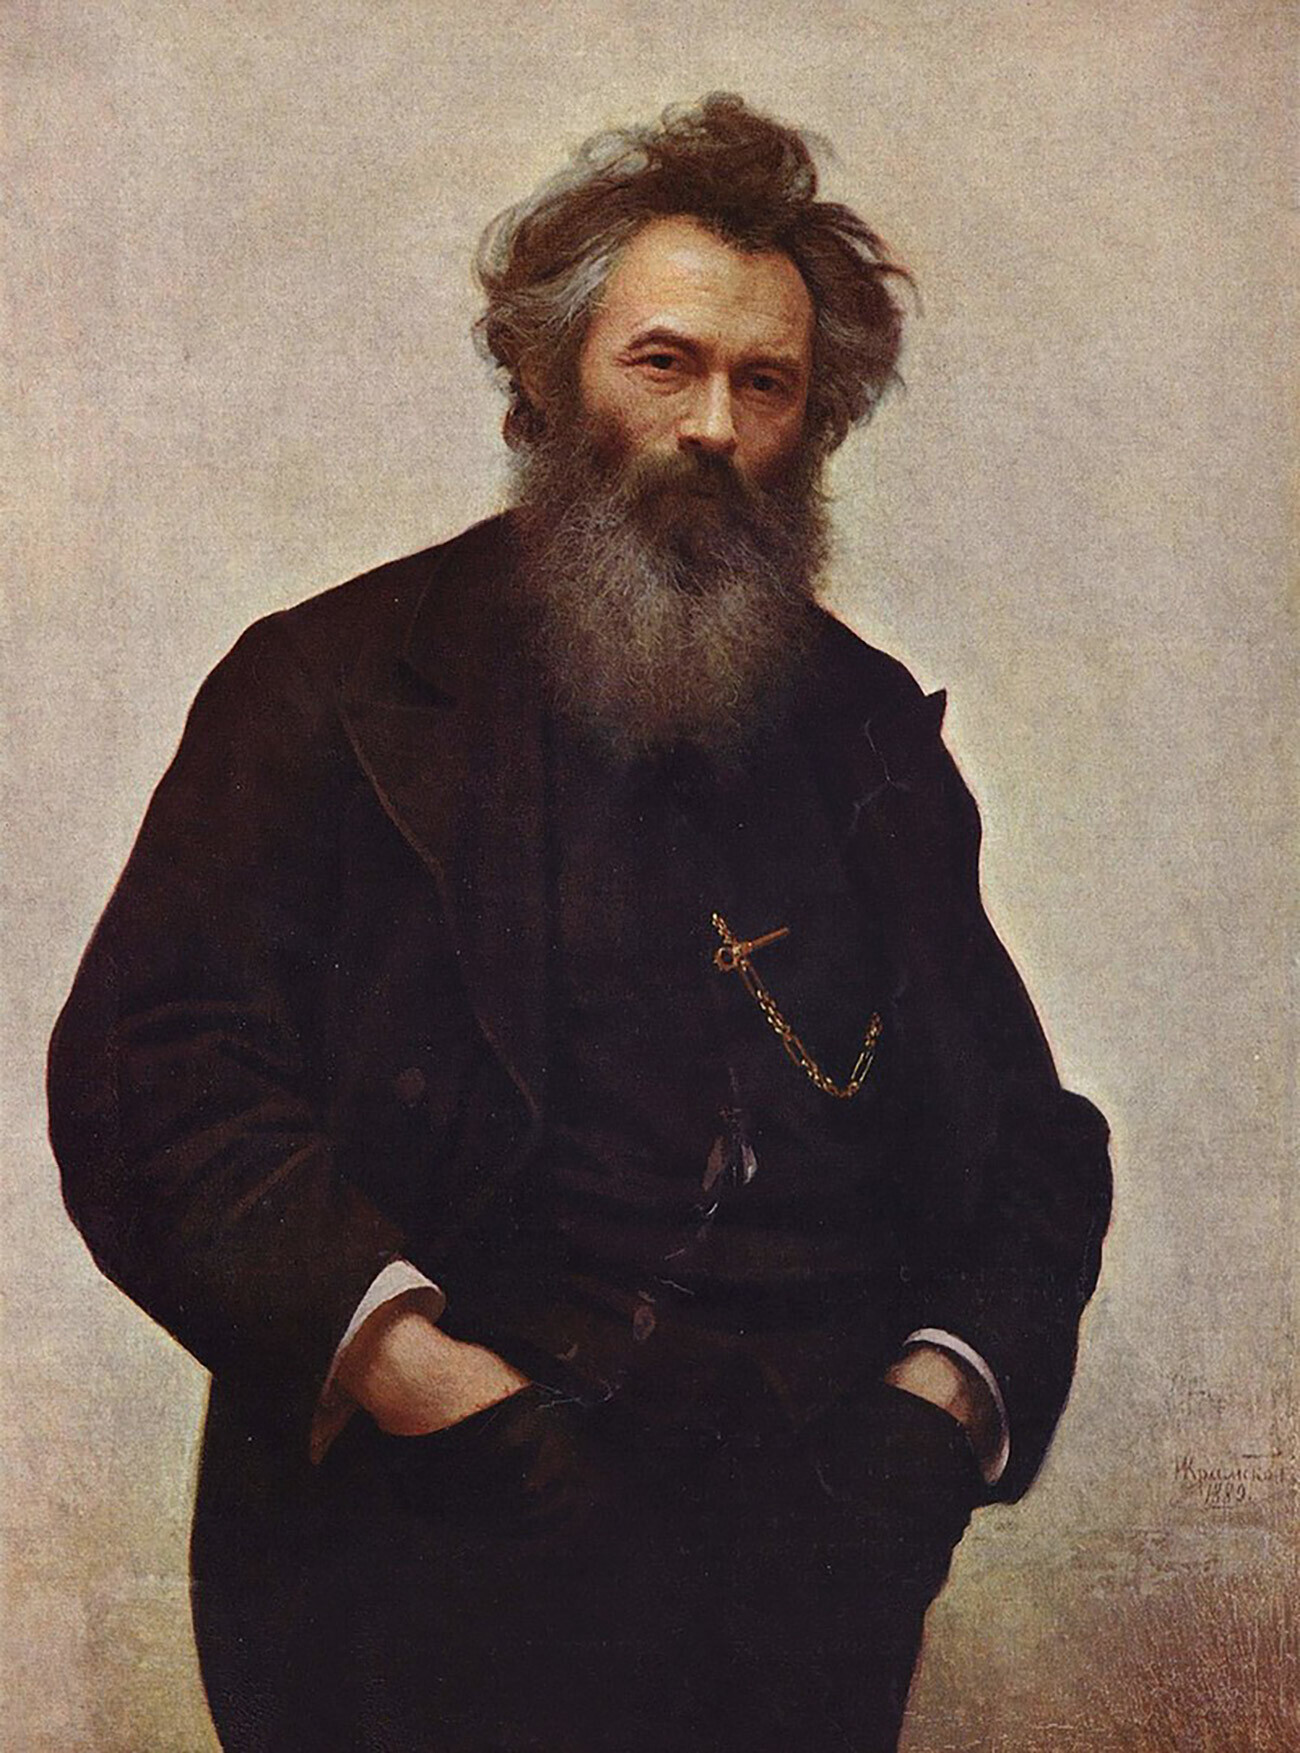 Retrato do artista I.I. Chíchkin. 1880. Feito por Ivan Kramskoi